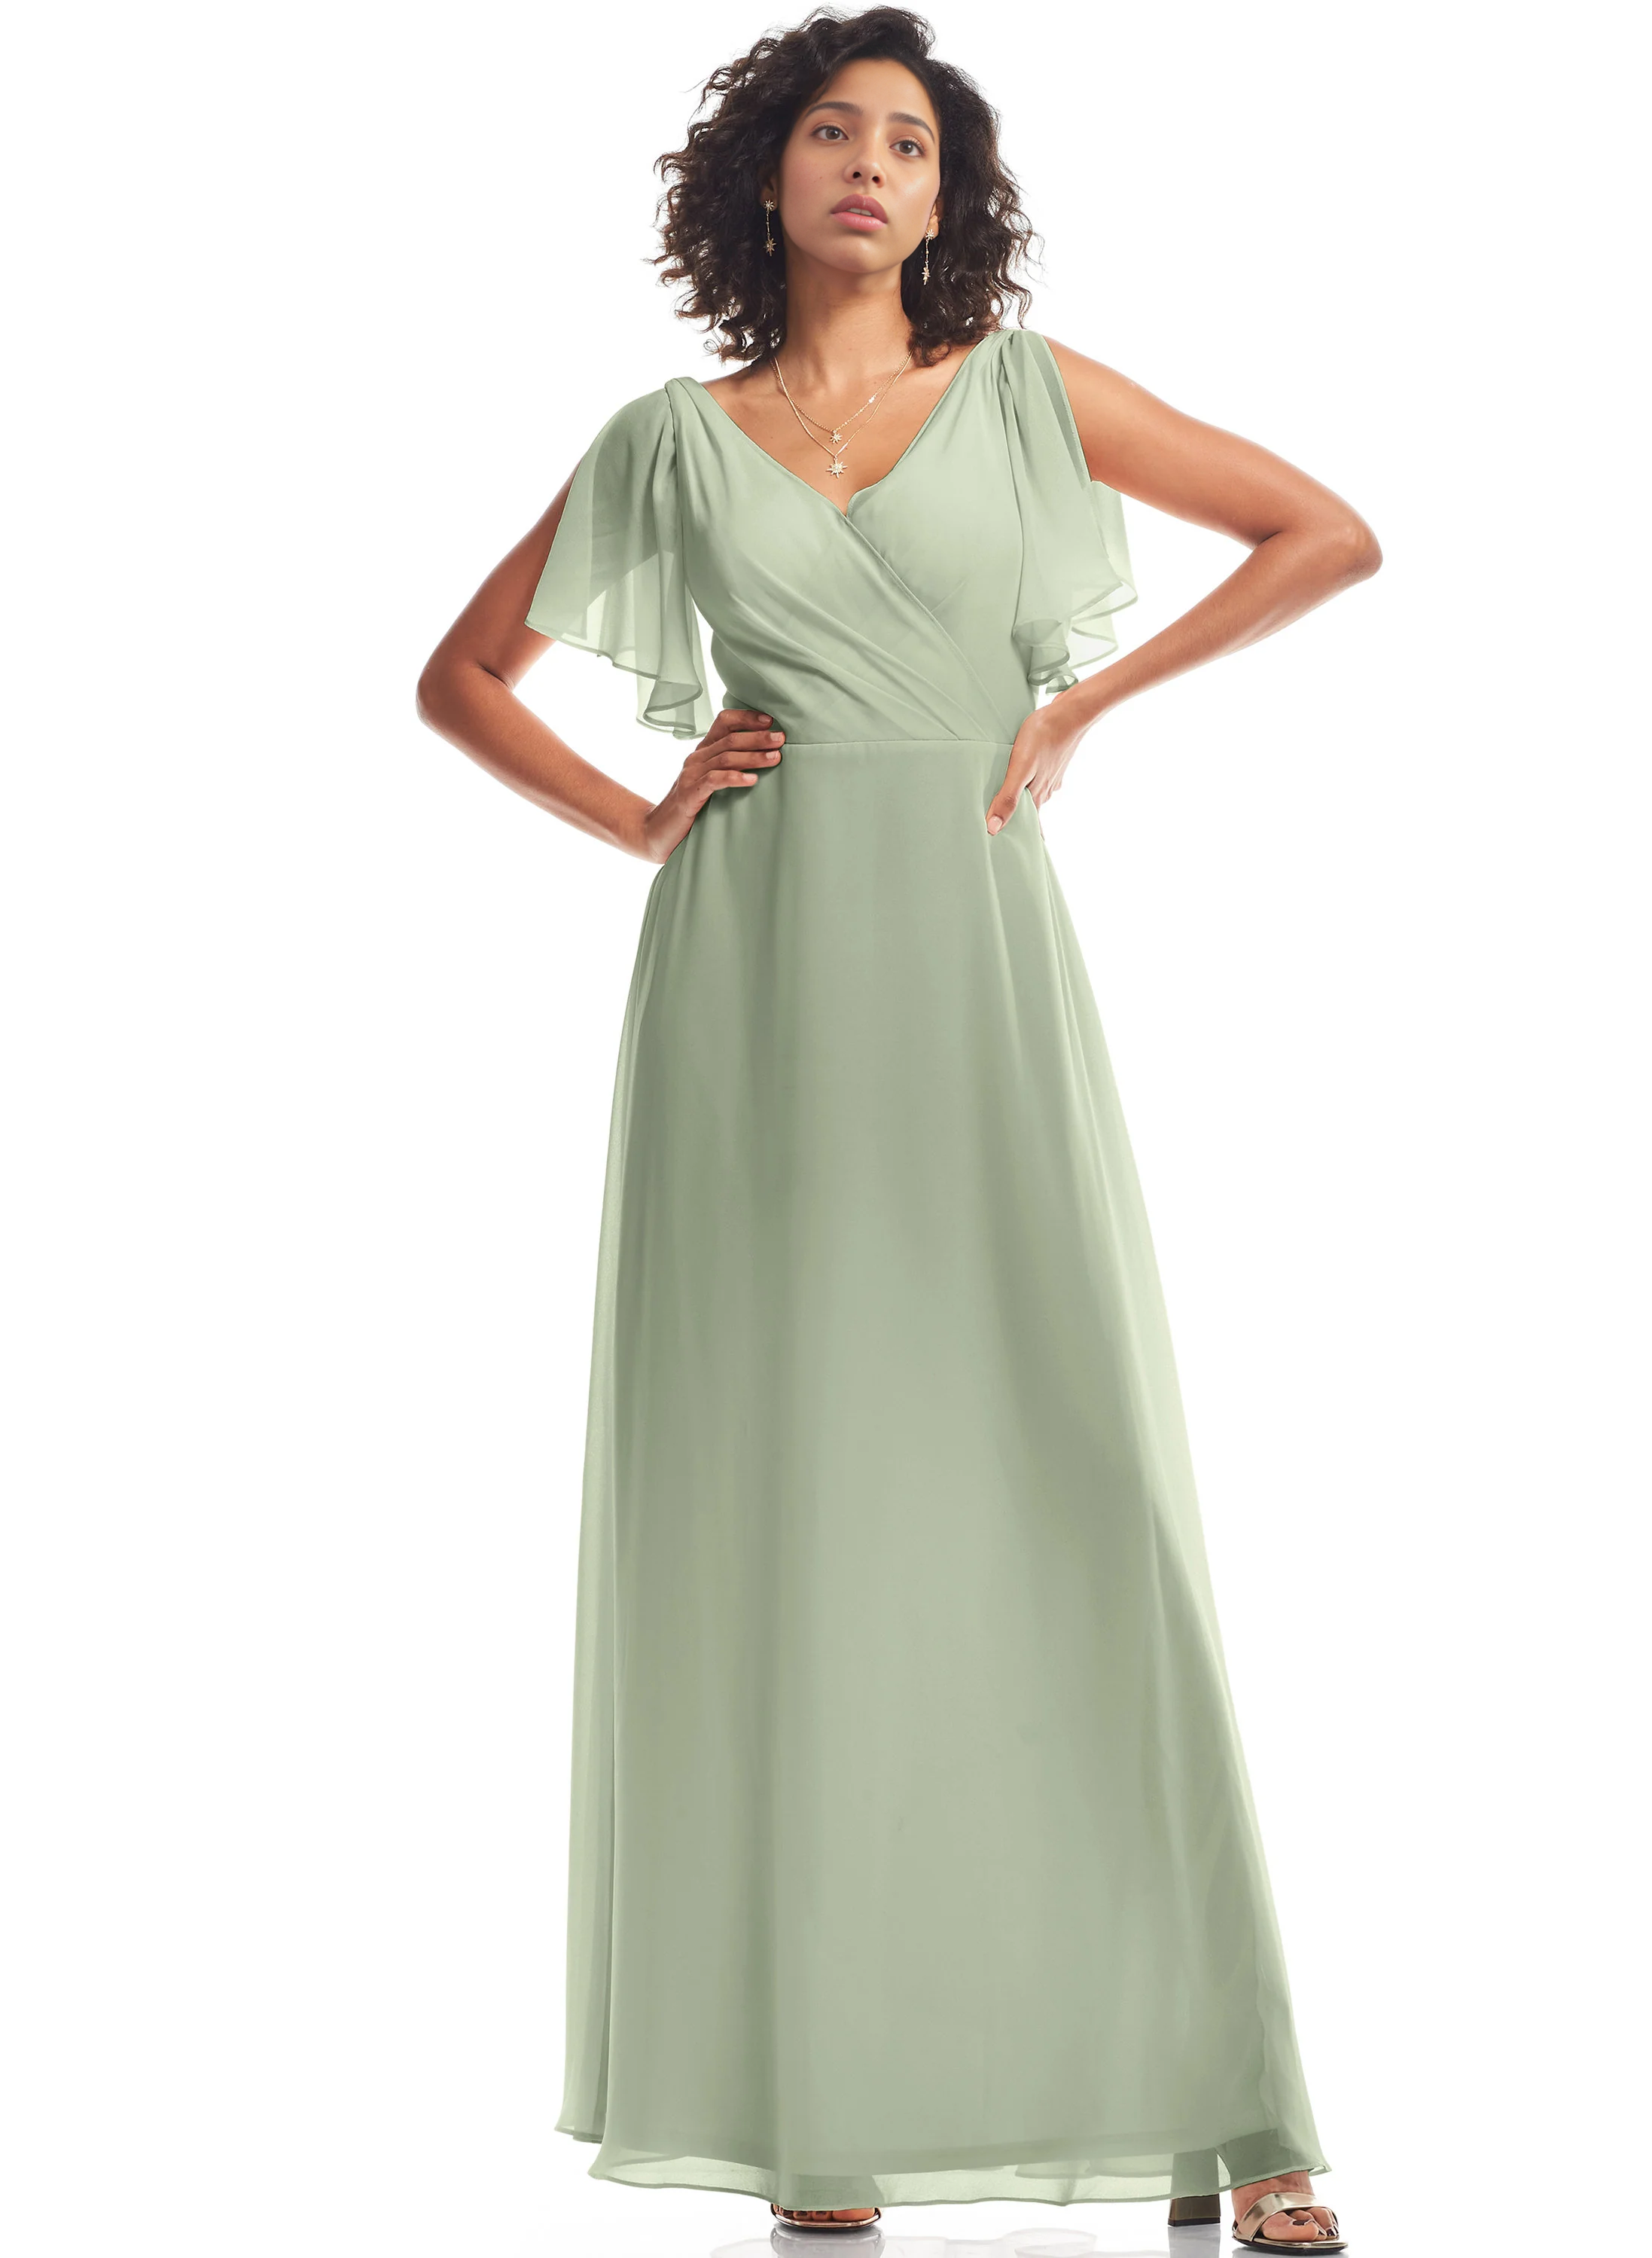 Celadon V-Neck A-Line Floor-Length Bridesmaid Dresses With Chiffon